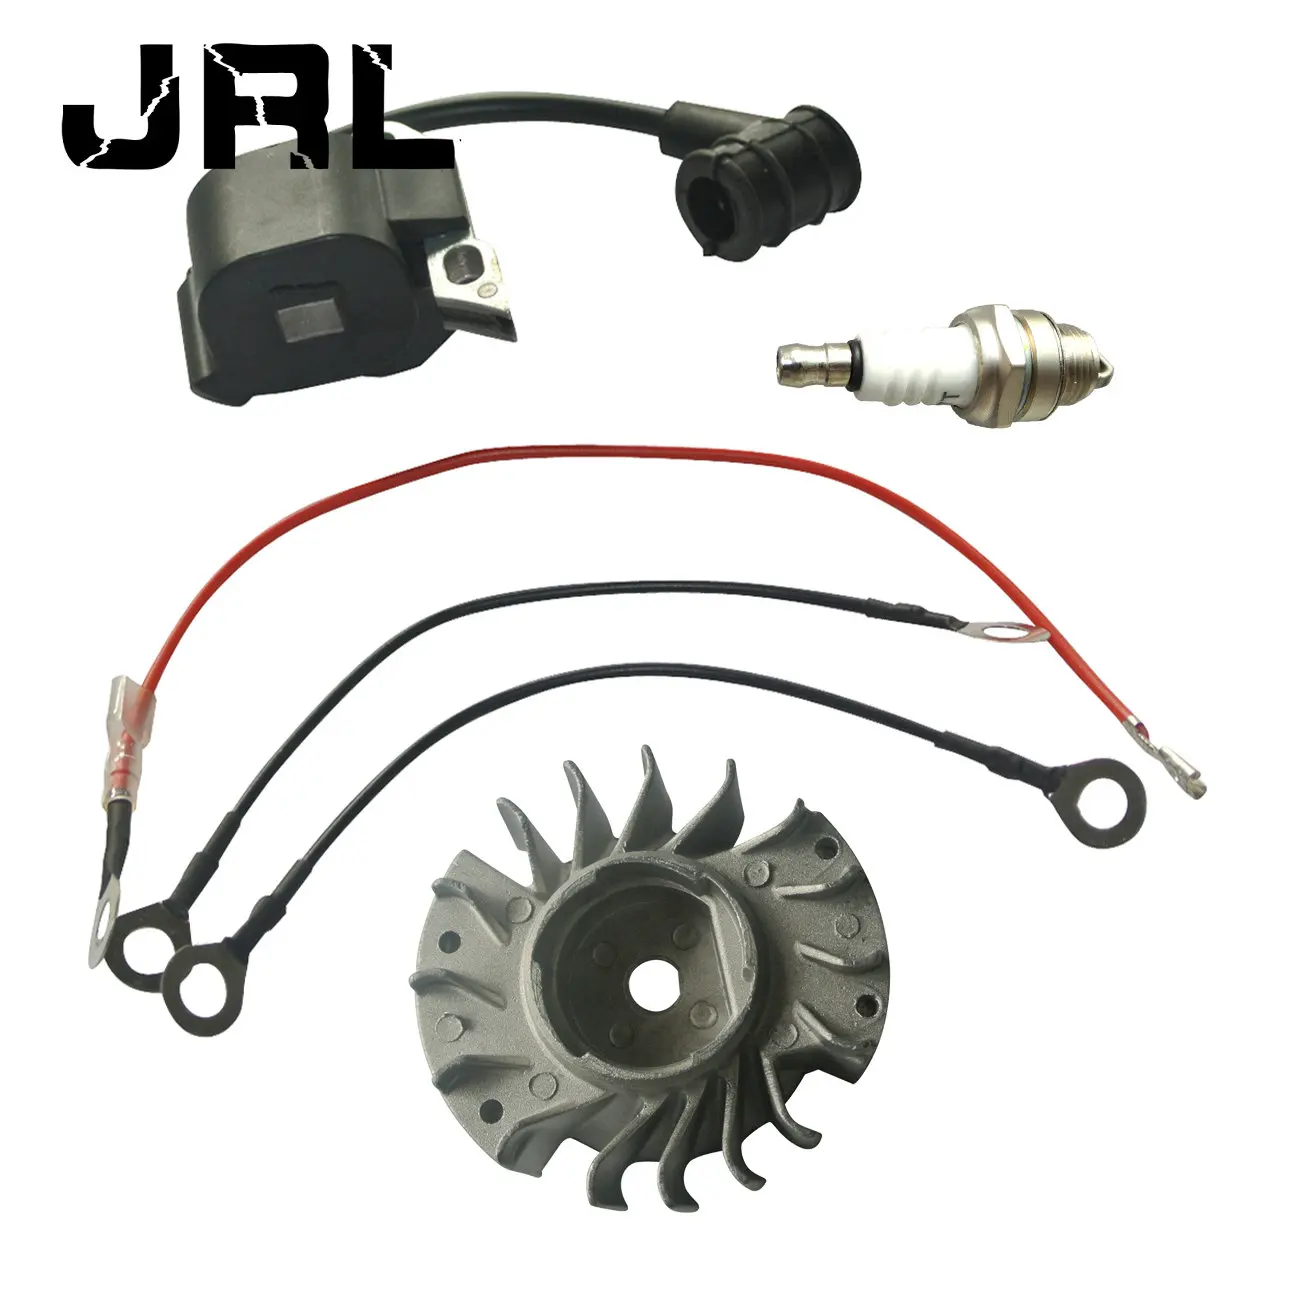 

Flywheel & Ignition Coil & Spark Plug Fit Stihl 018 MS180 Chainsaw Engine Motor